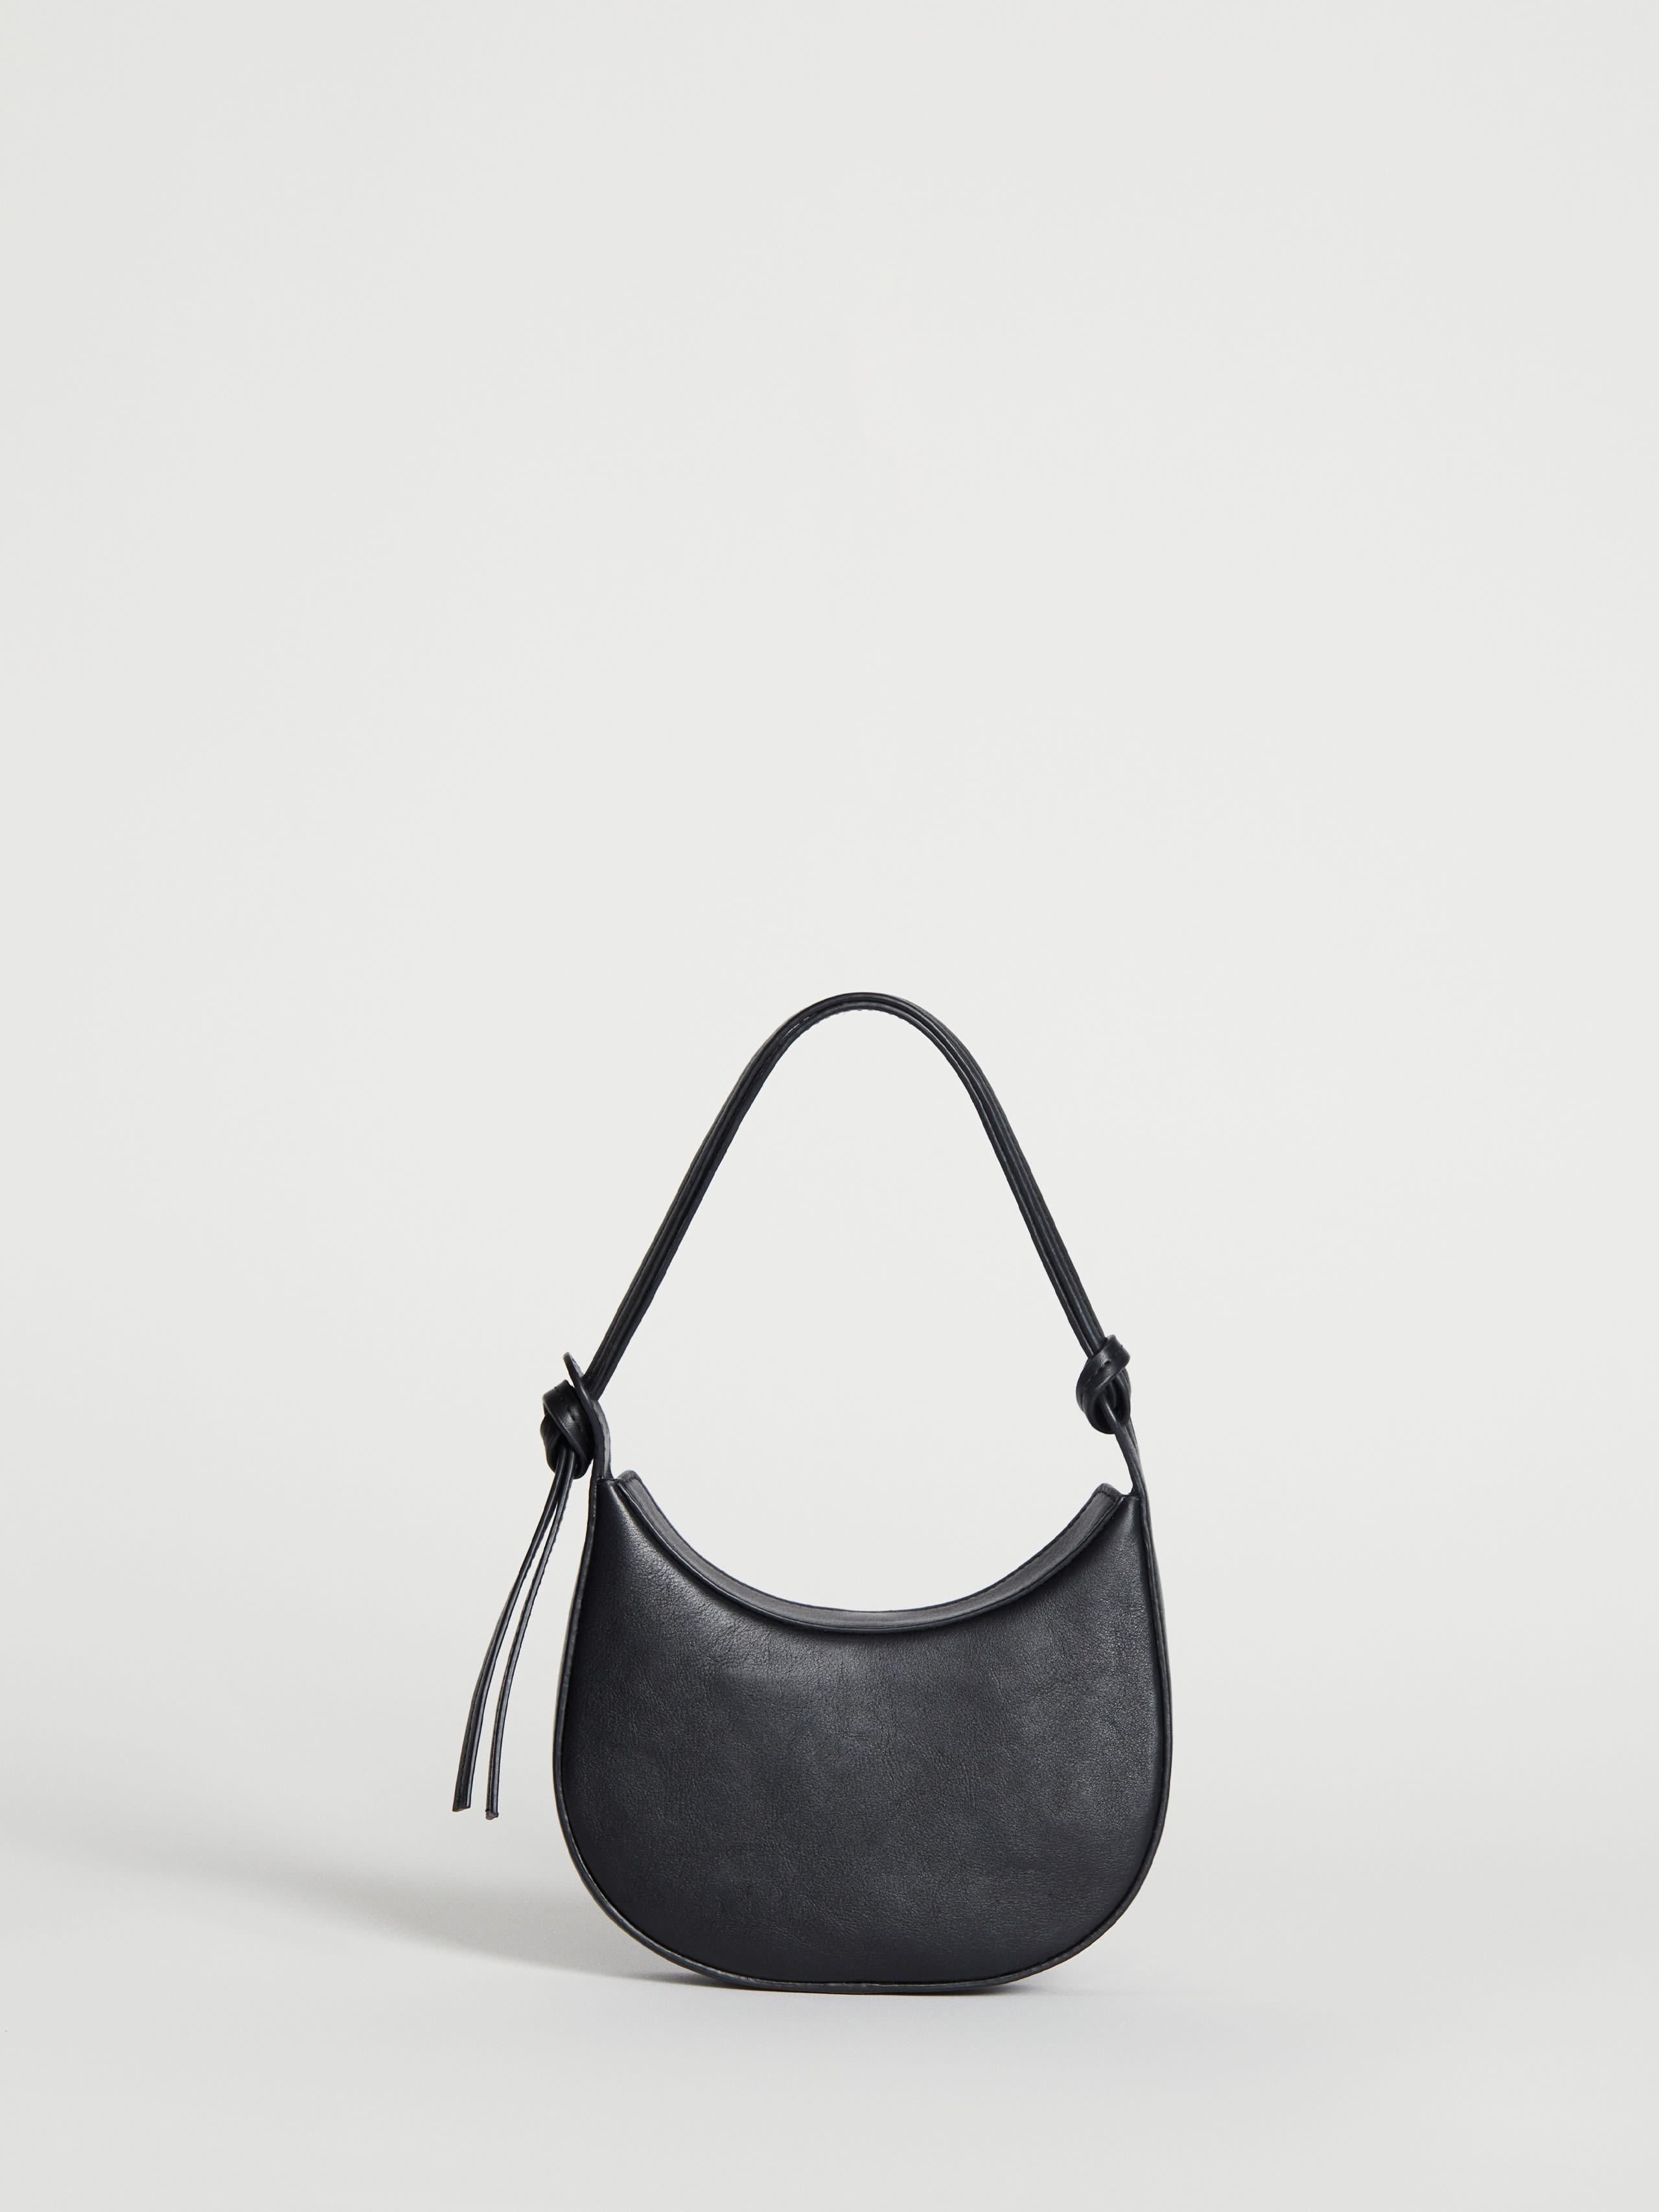 Reformation Mini Rosetta Shoulder Bag In Black Leather